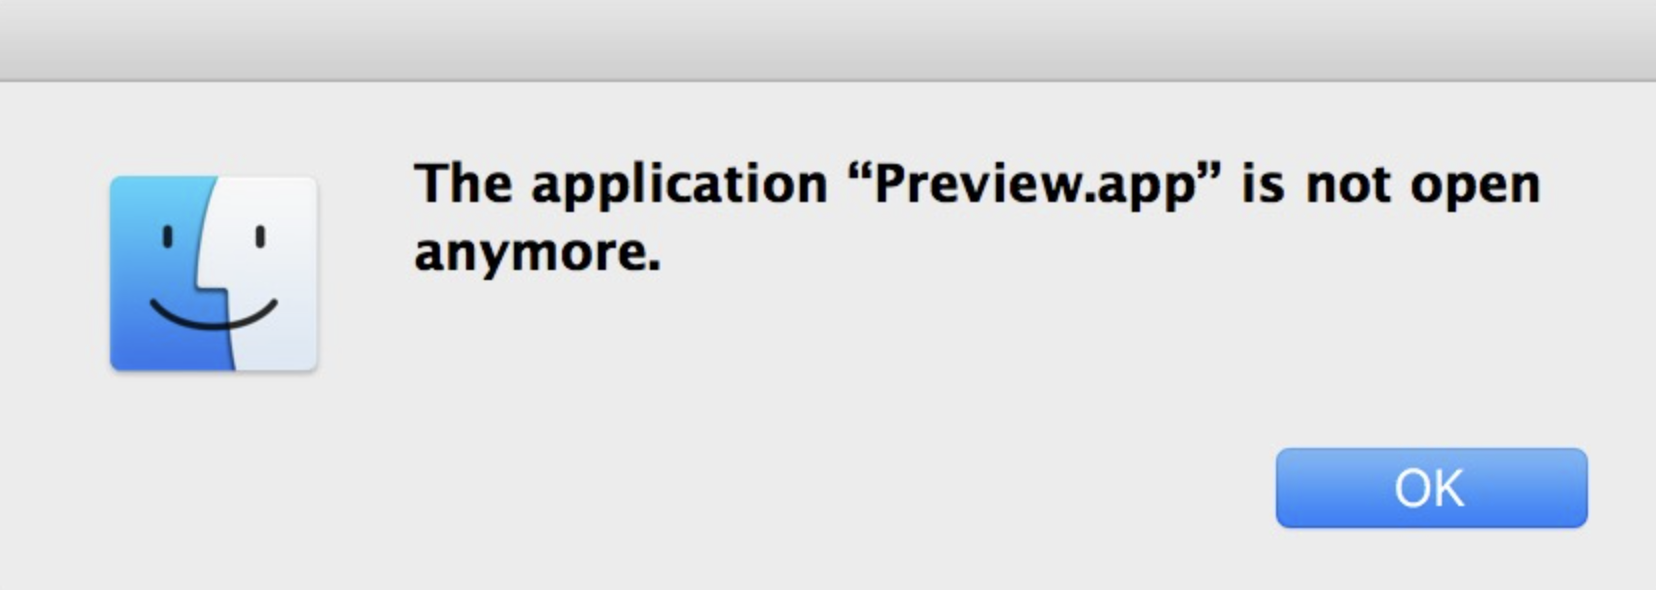 Preview App error message